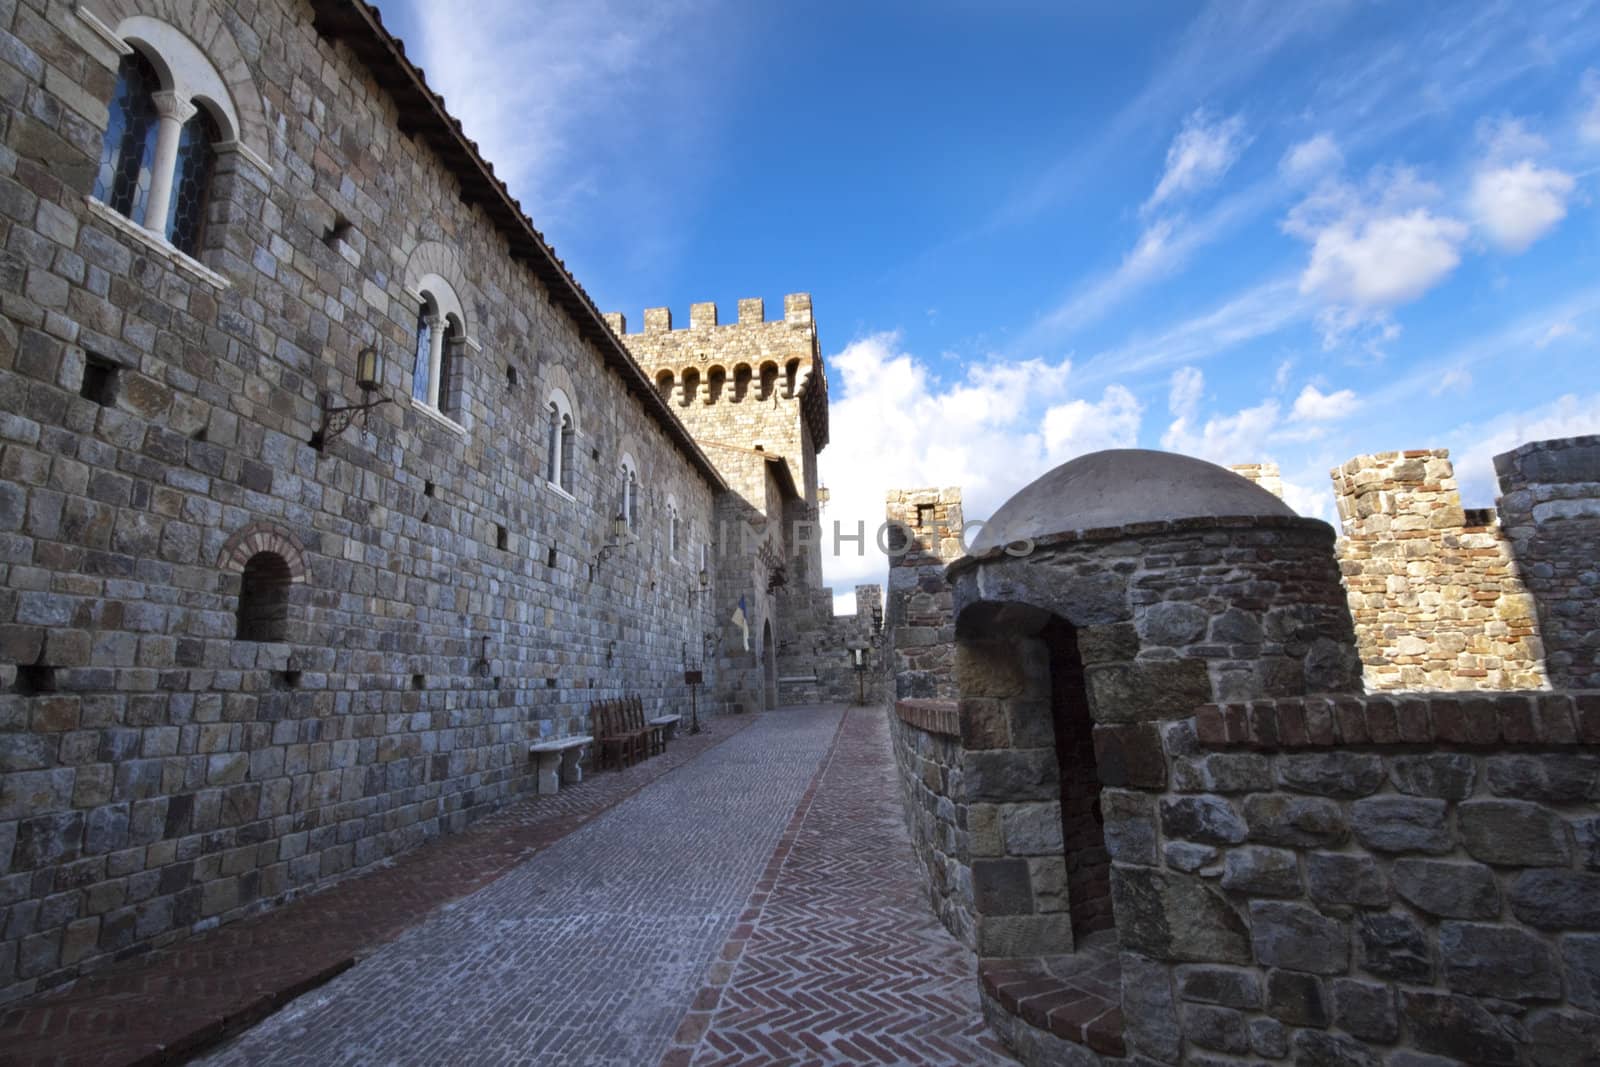 The interior walkway around a castle walls